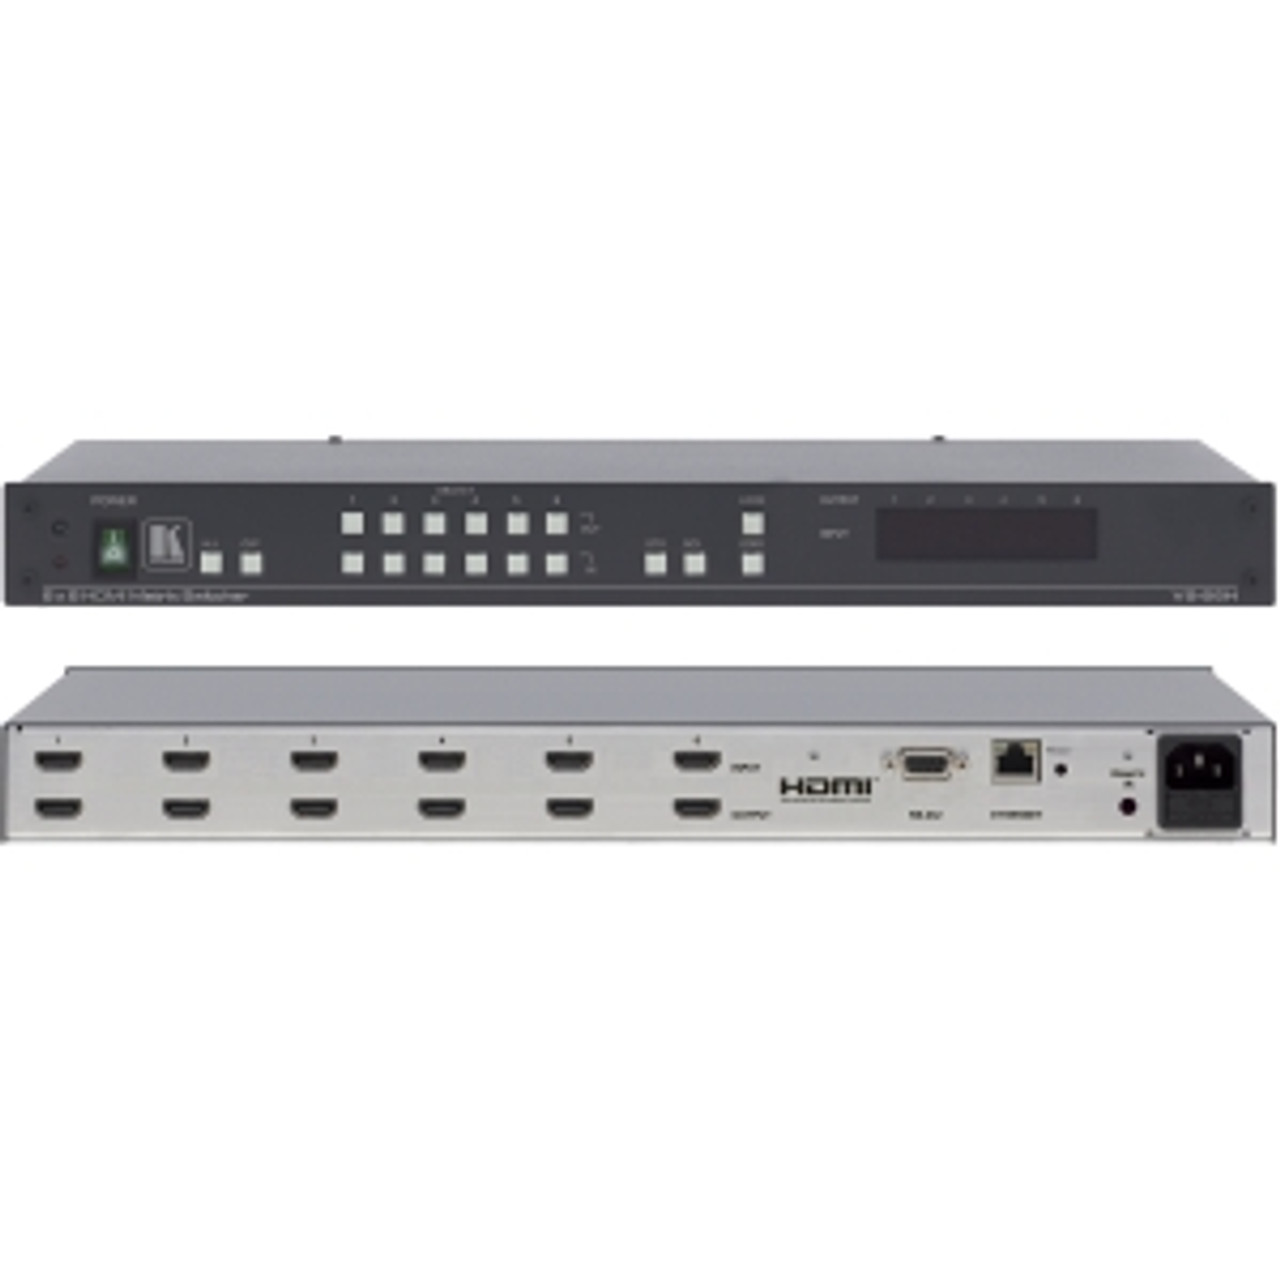 VS-66HDCP Kramer VS-66HDCP Matrix Video Switch 6 x DVI Video In, 6 x DVI Video Out, 1 x DB-9 Serial, 1 x RJ-45 Network 1920 x 1200 WUXGA